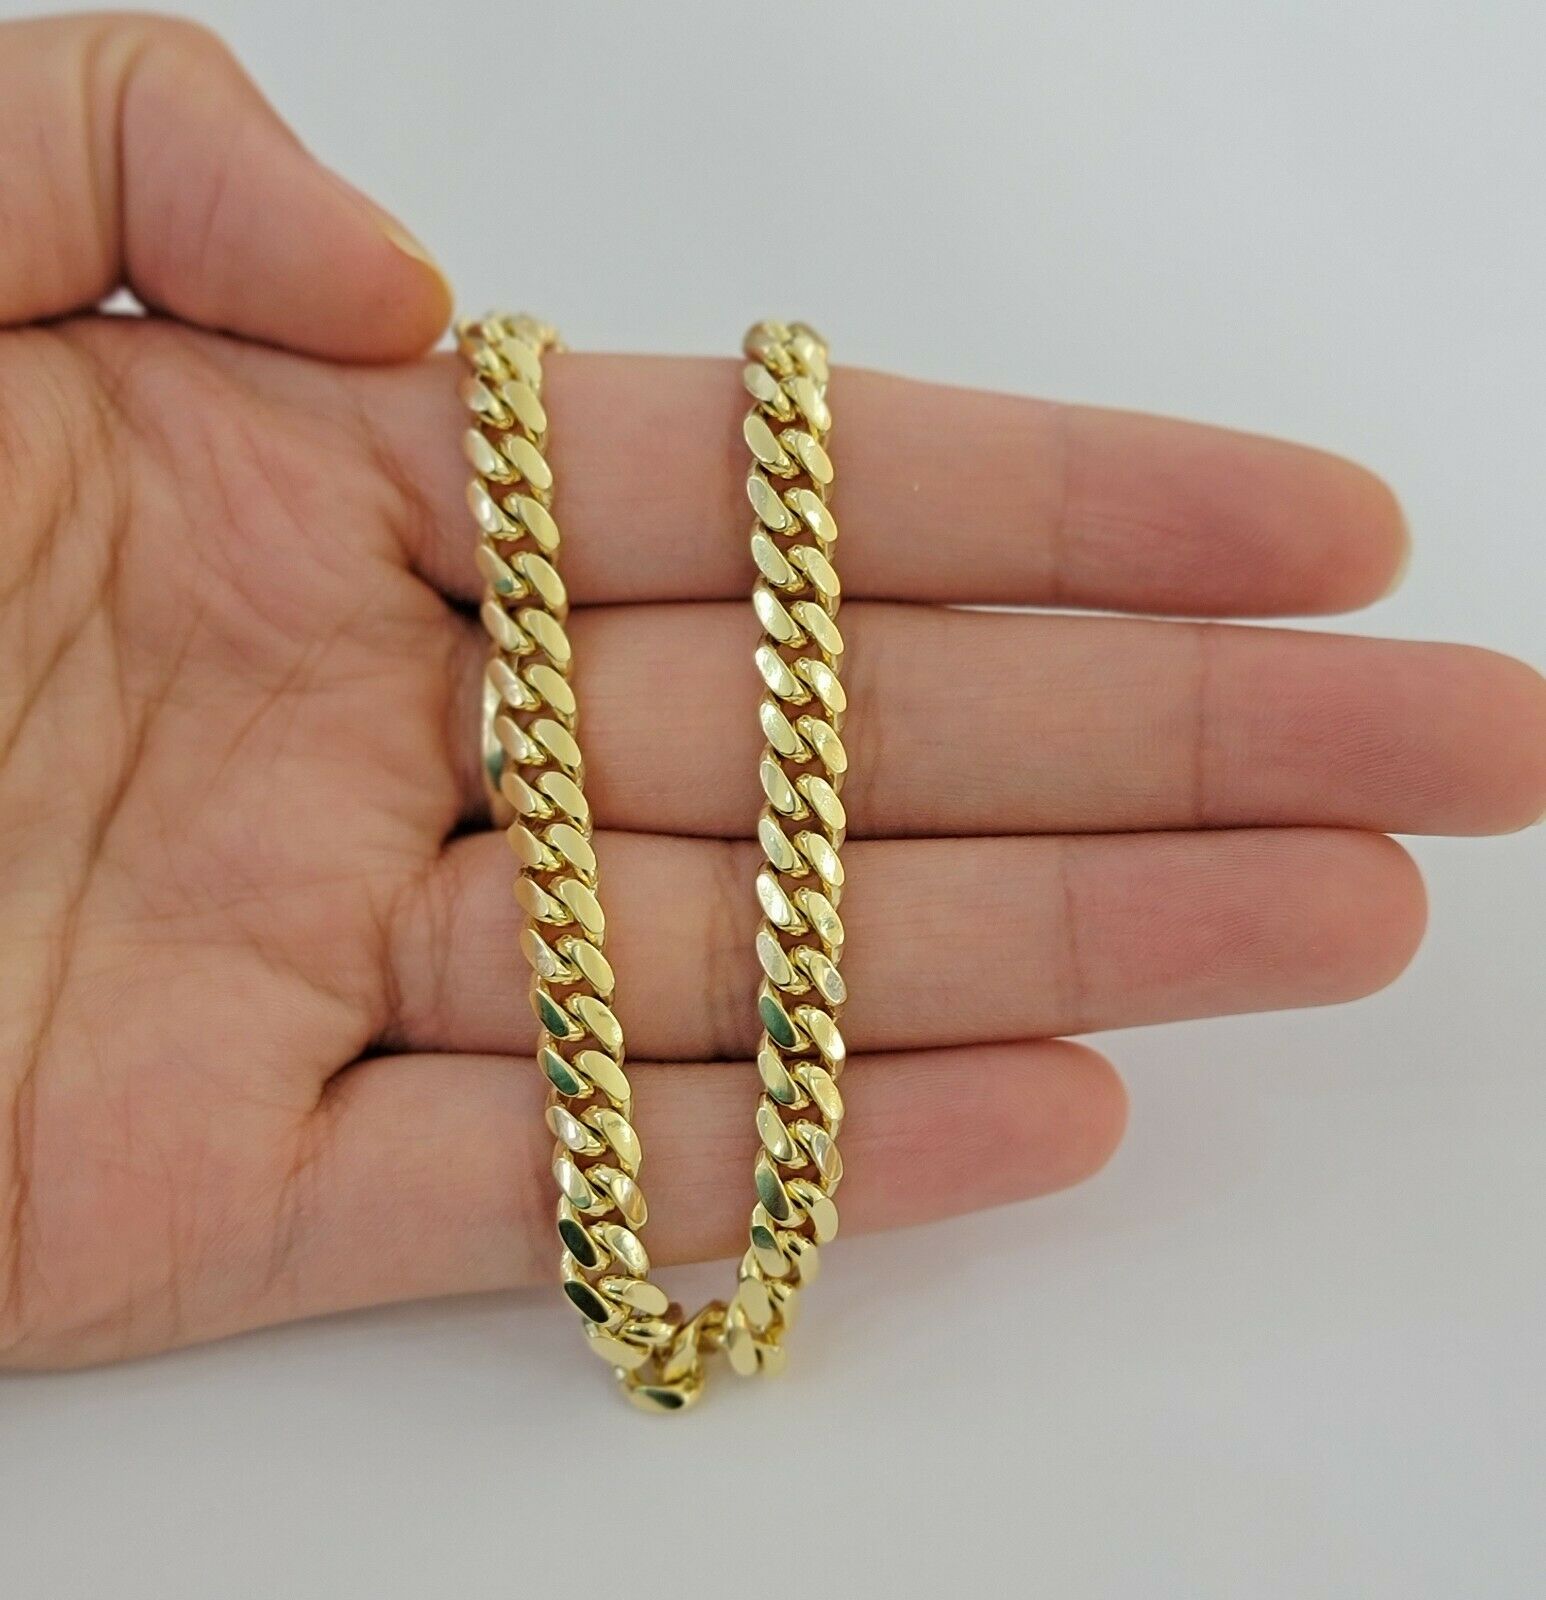 10k solid maimi cuban Link bracelet 7.5 Inch 6mm Real 10kt yellow Gold Men Women